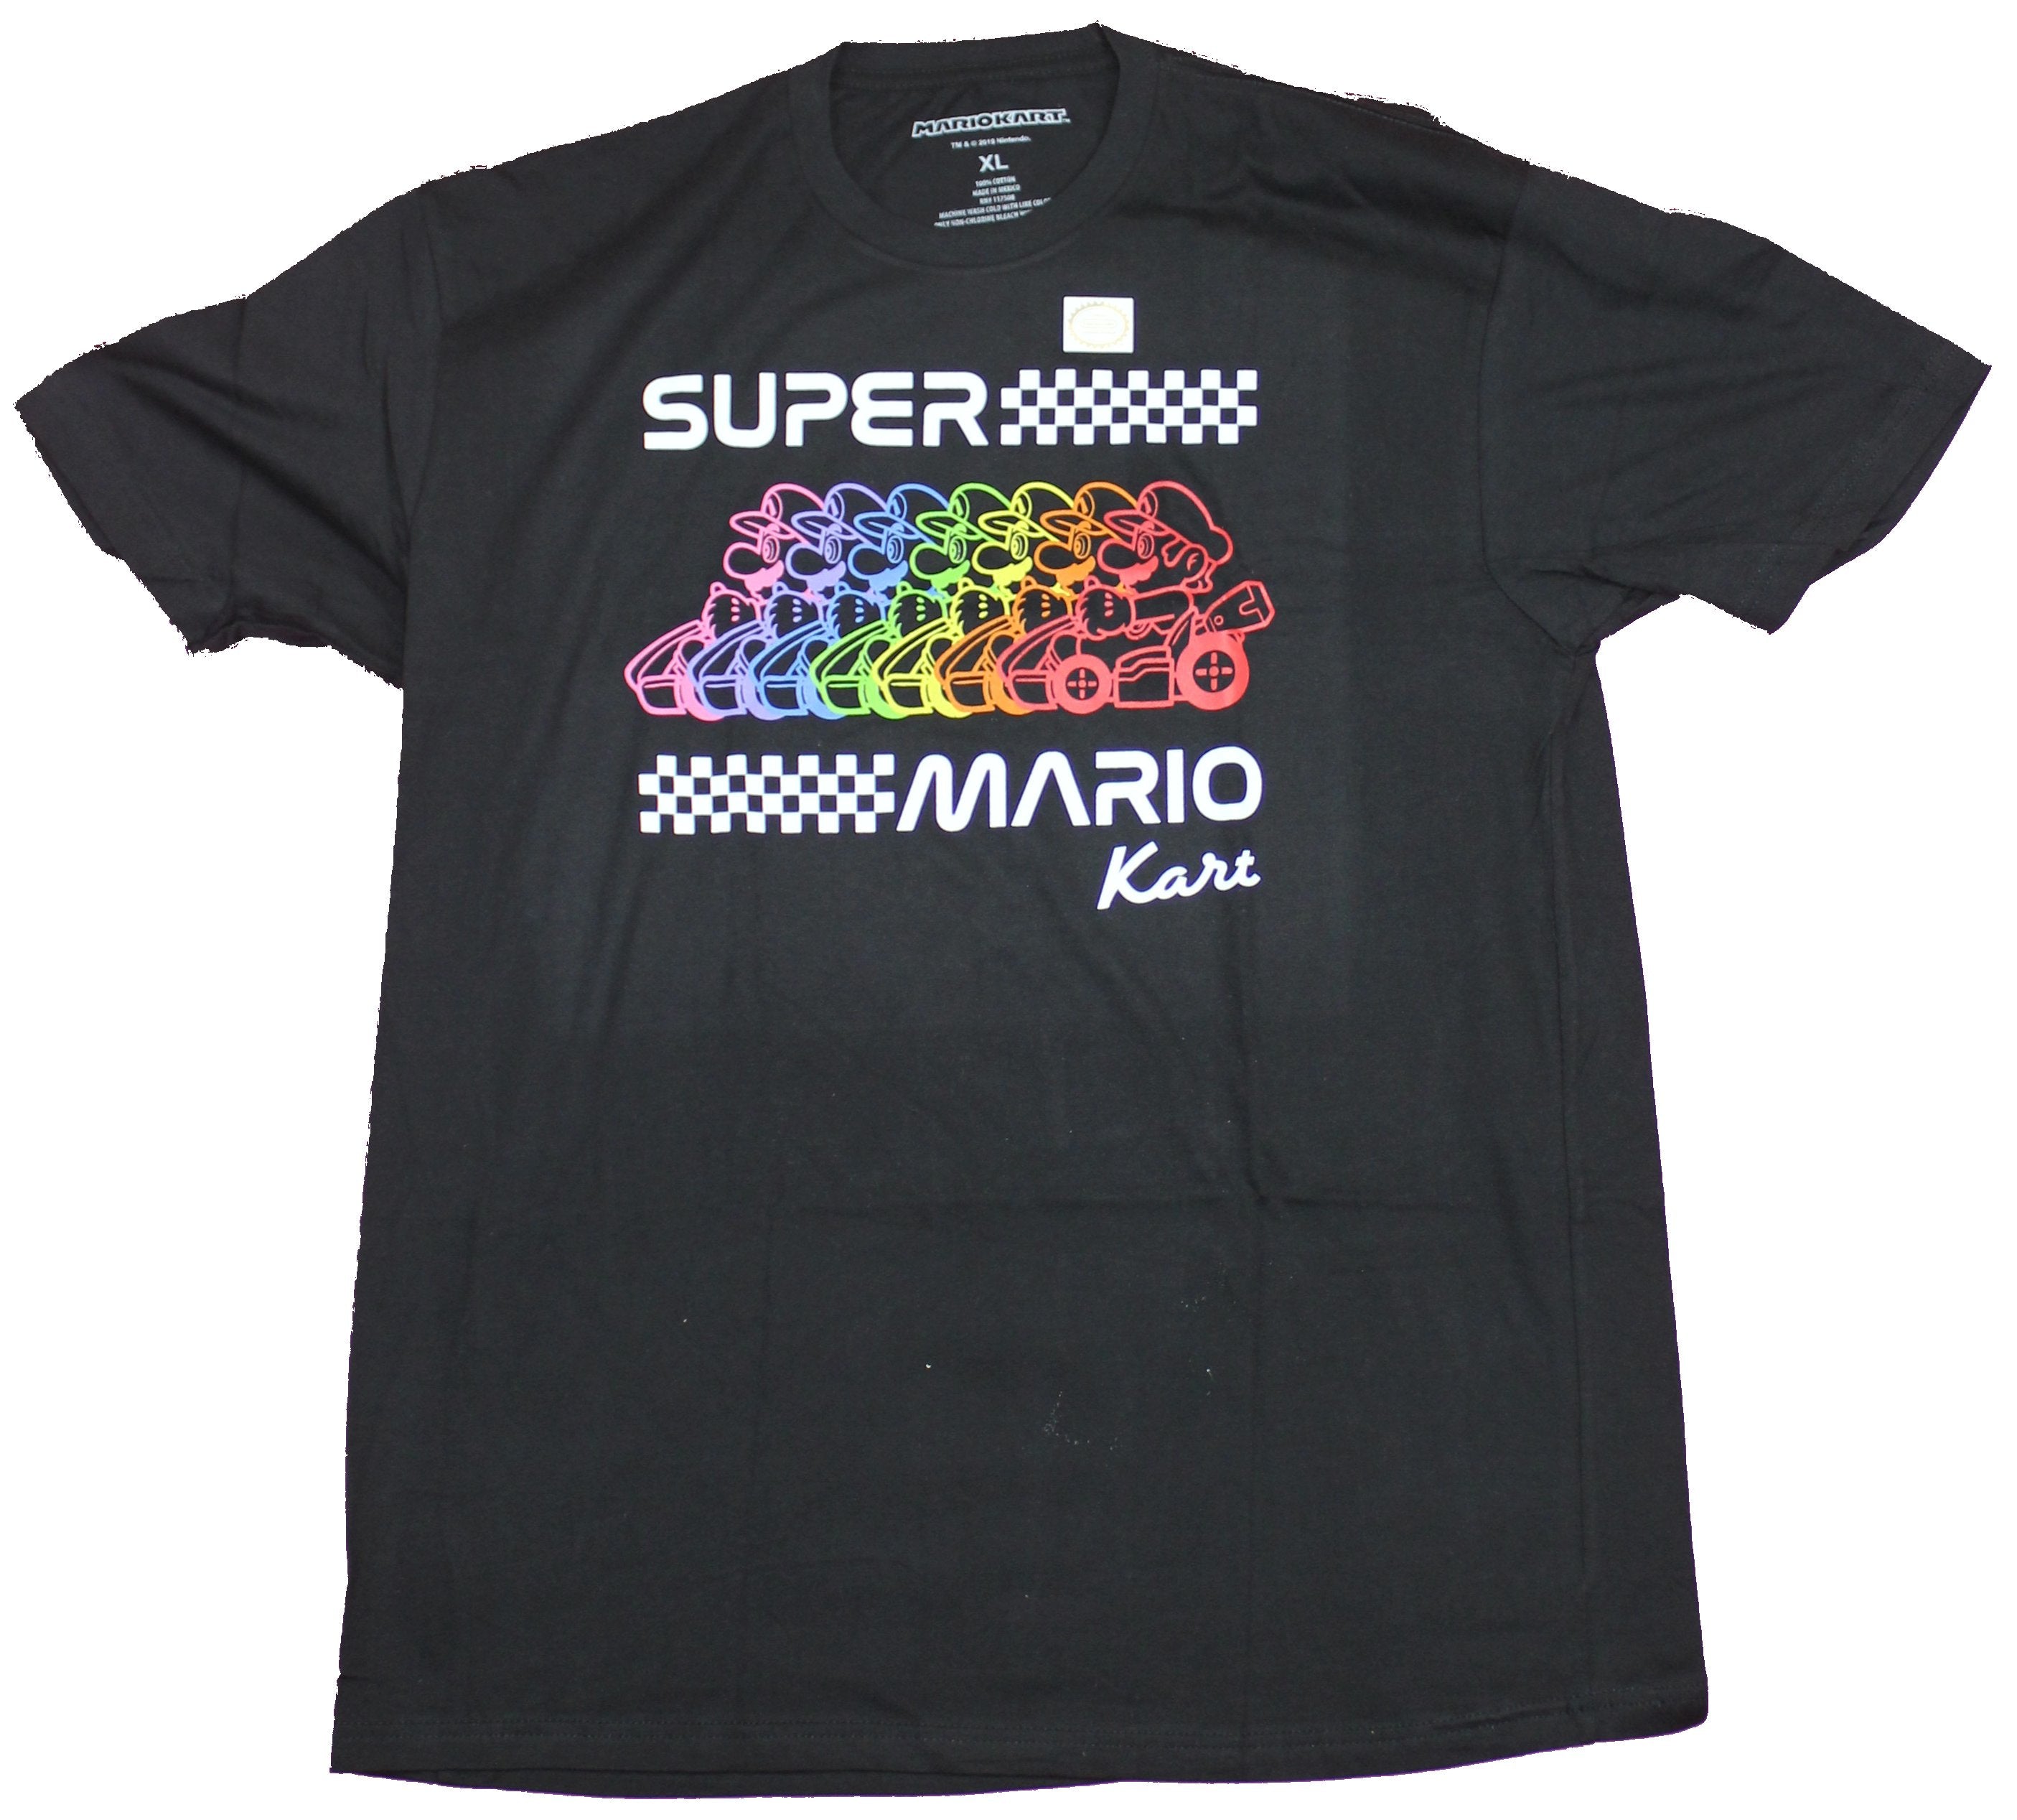 Super Mario Kart Mens T-Shirt - Outlines Colorful Mario Rainbow Design